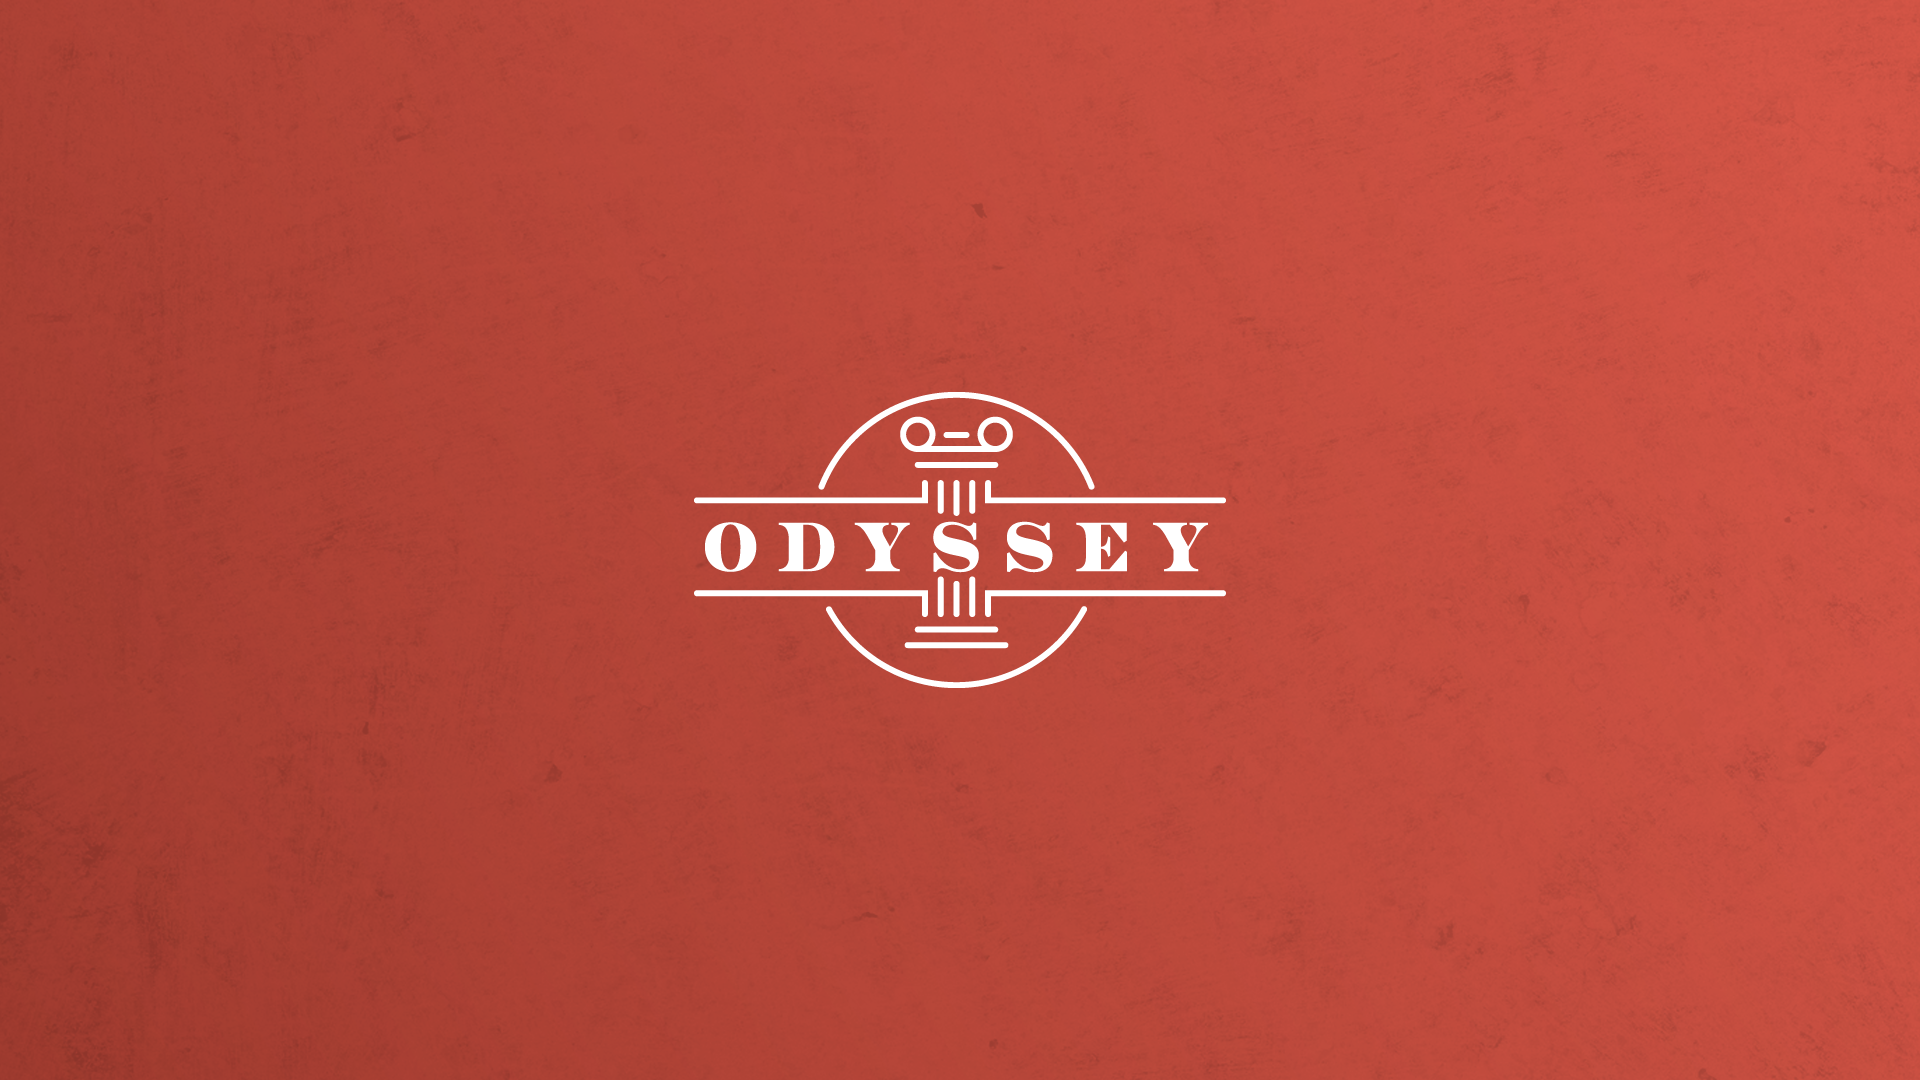 Odyssey_Artwork-Primary-Textured